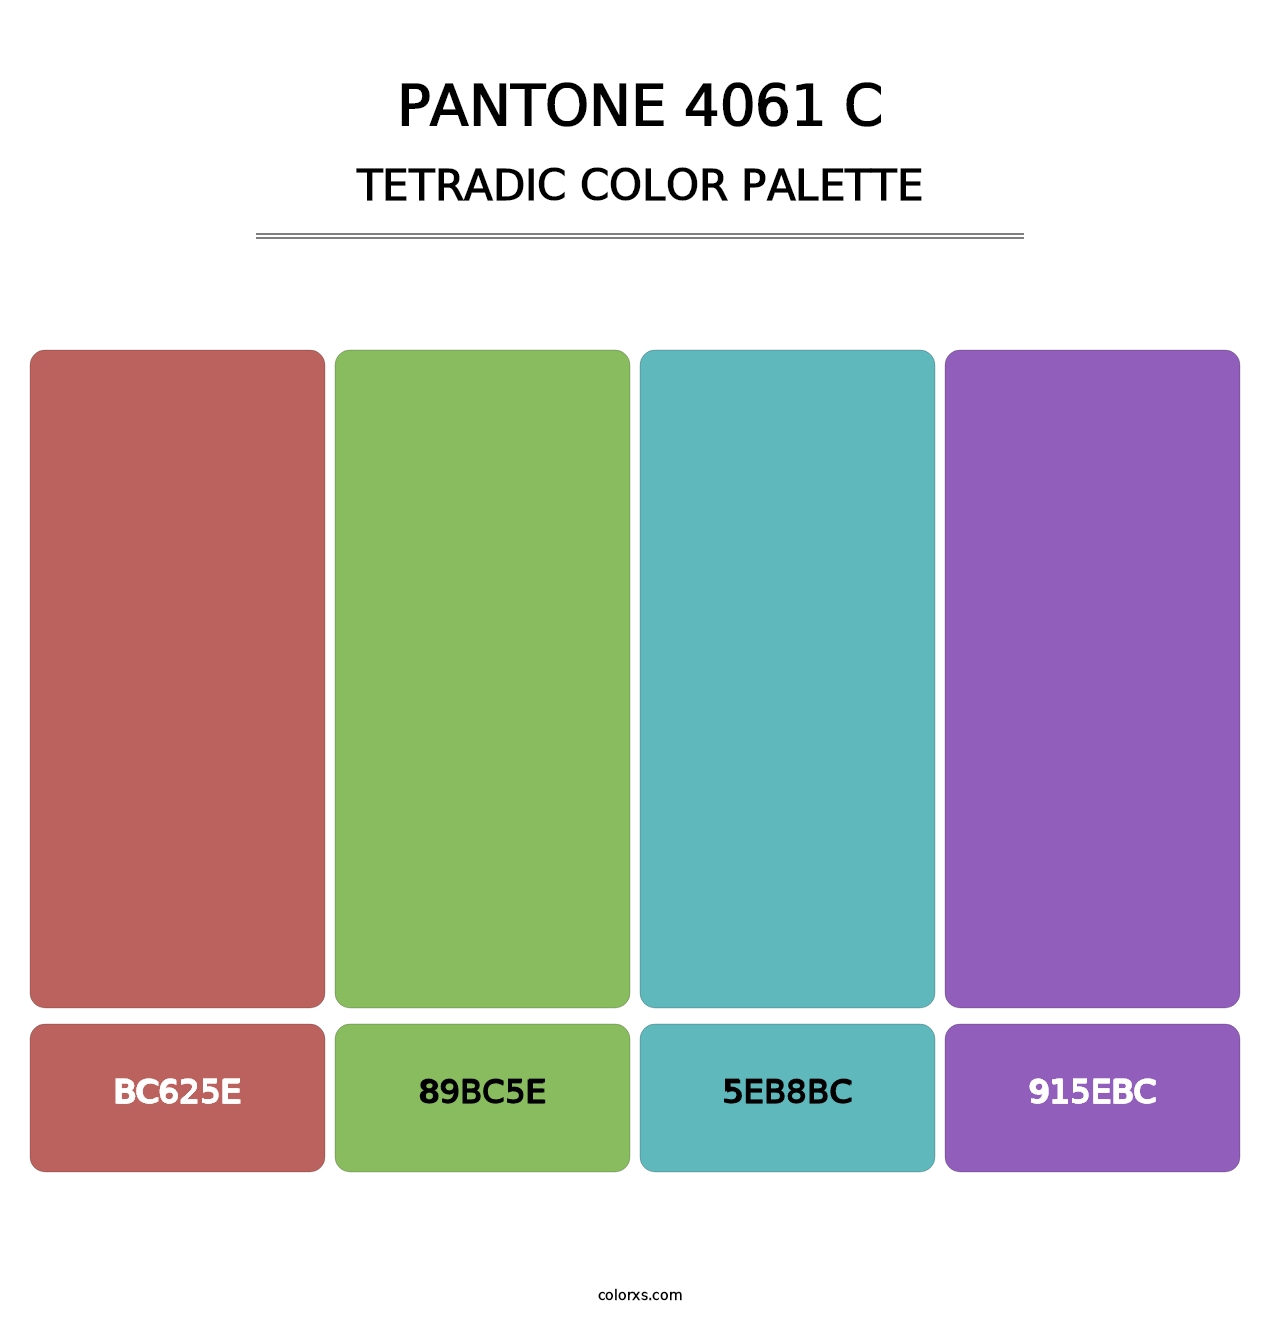 PANTONE 4061 C - Tetradic Color Palette